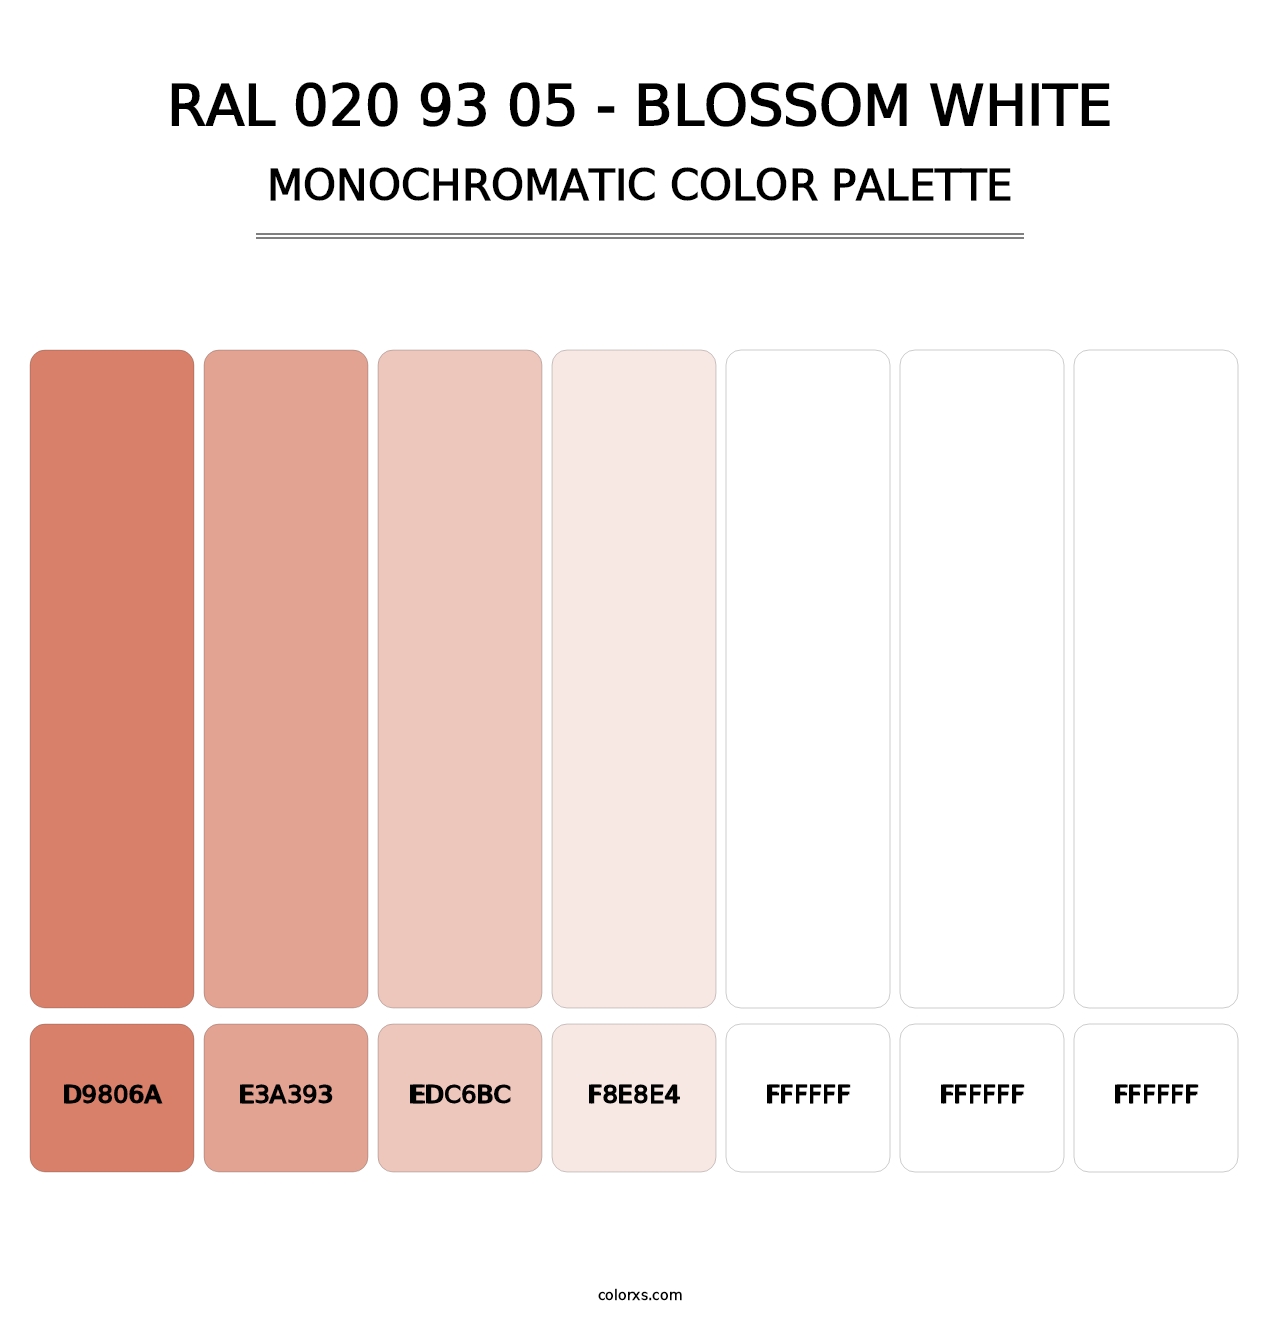 RAL 020 93 05 - Blossom White - Monochromatic Color Palette